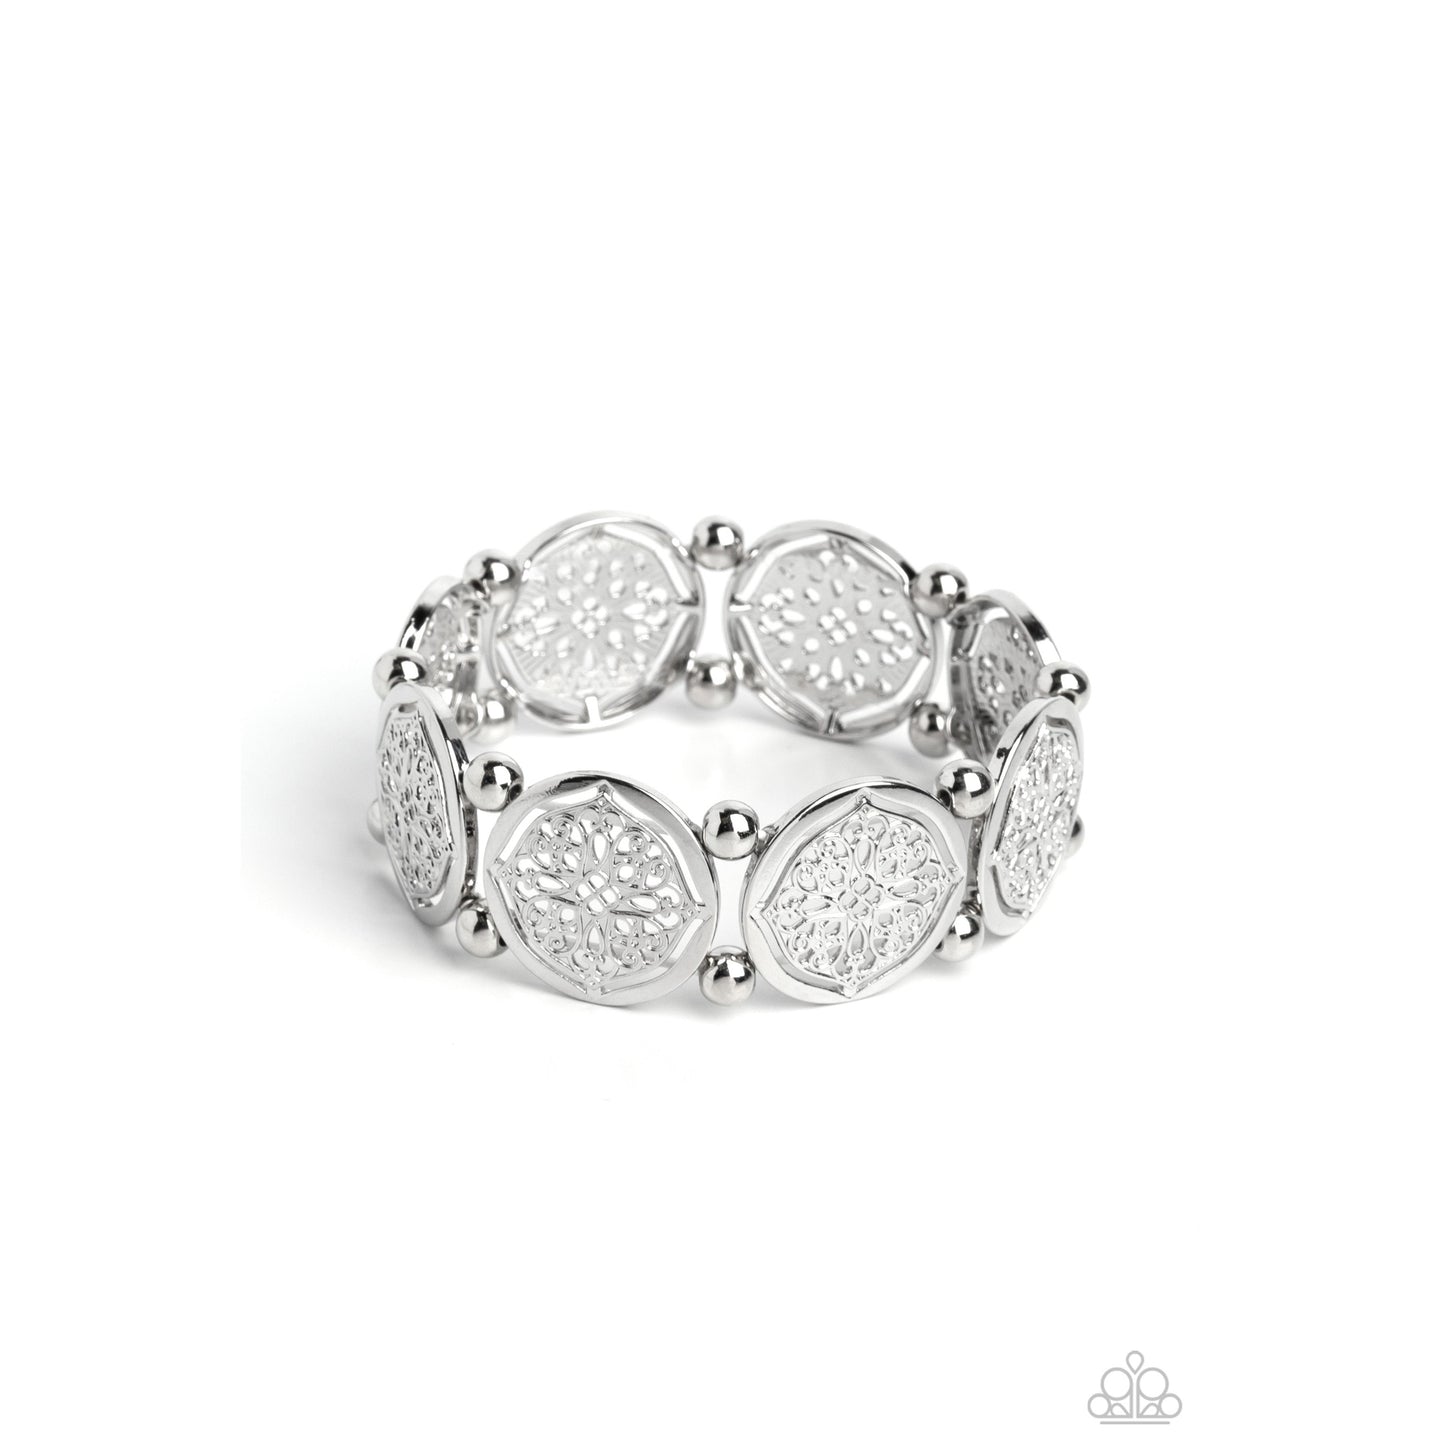 Filigree Fanfare - Silver Bracelet - Bling by Danielle Baker